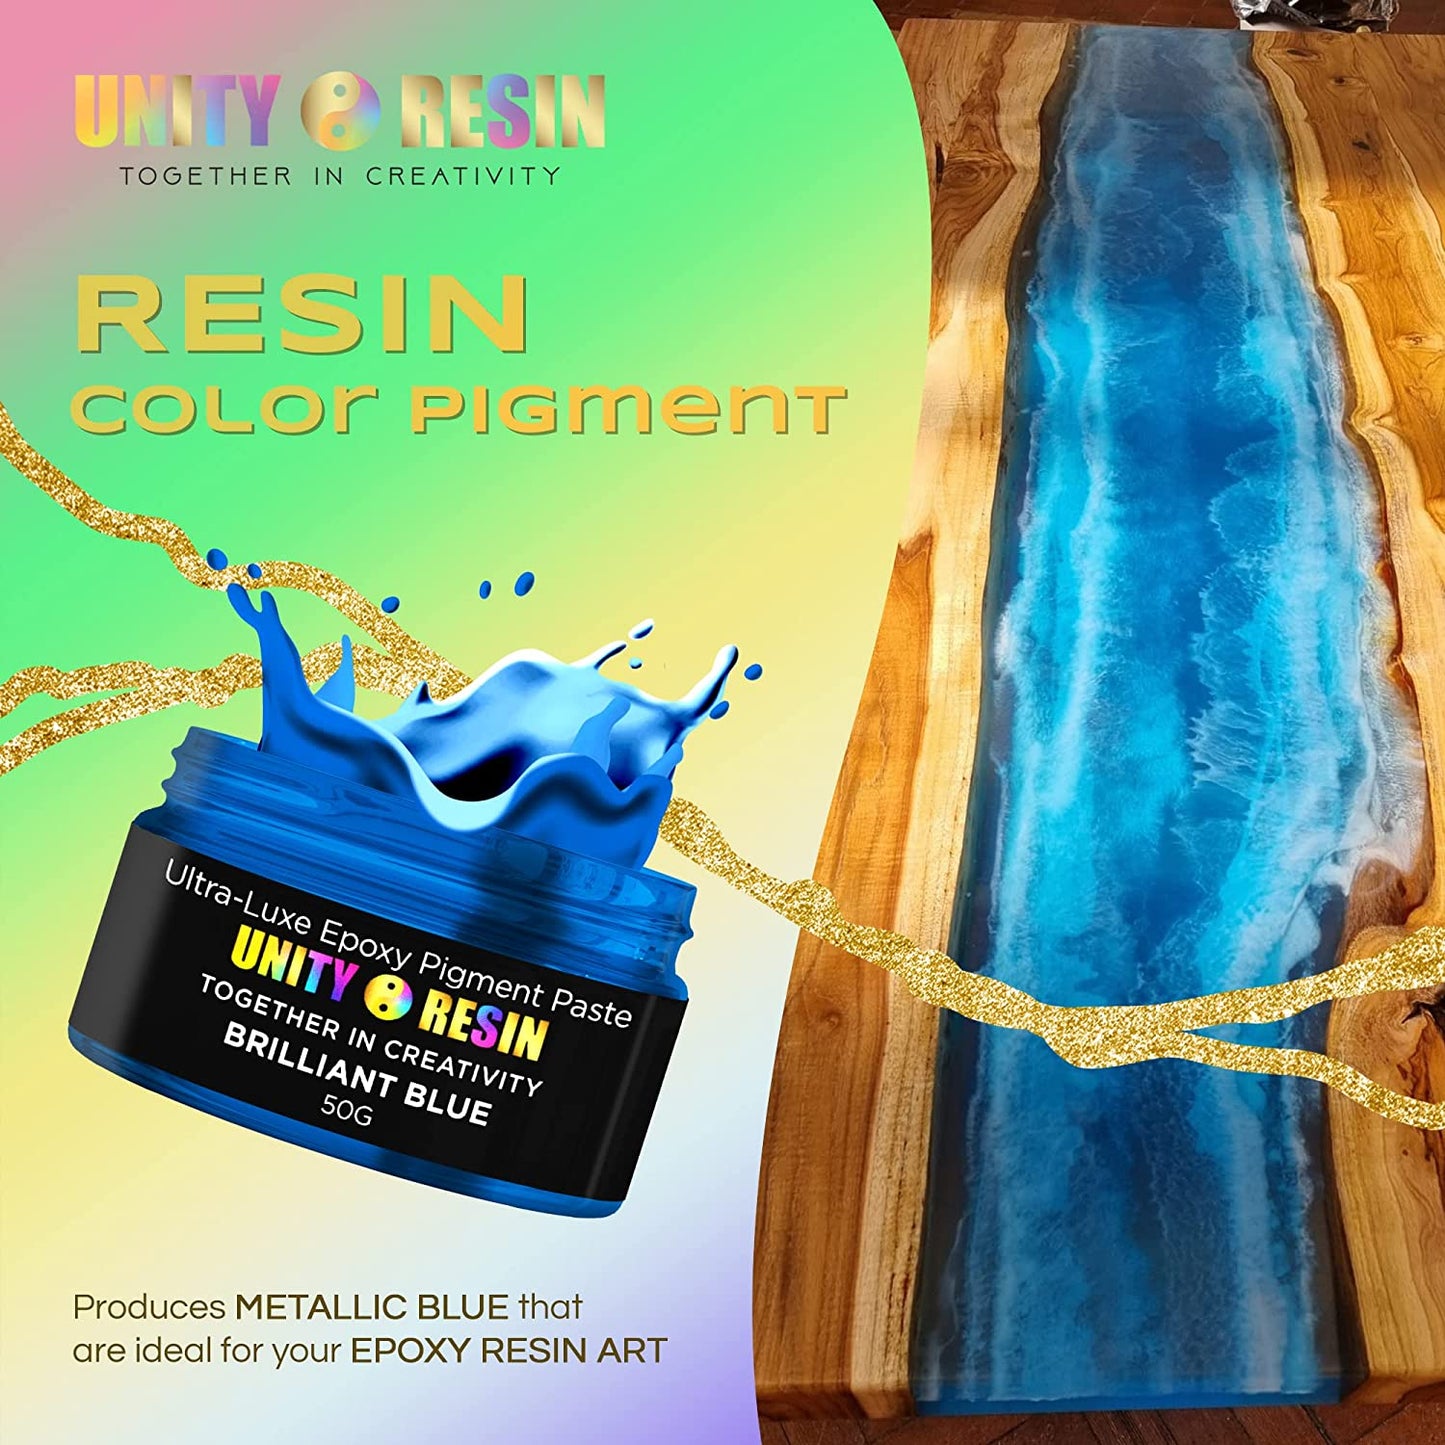 resin, resin color, resin paint, epoxy pigment paste, resin paste, resin paint, resin wave blue, resin ocean art, resin blue paint, blue mica powder, blue mica, resin ocean art, resin paint, resin dye